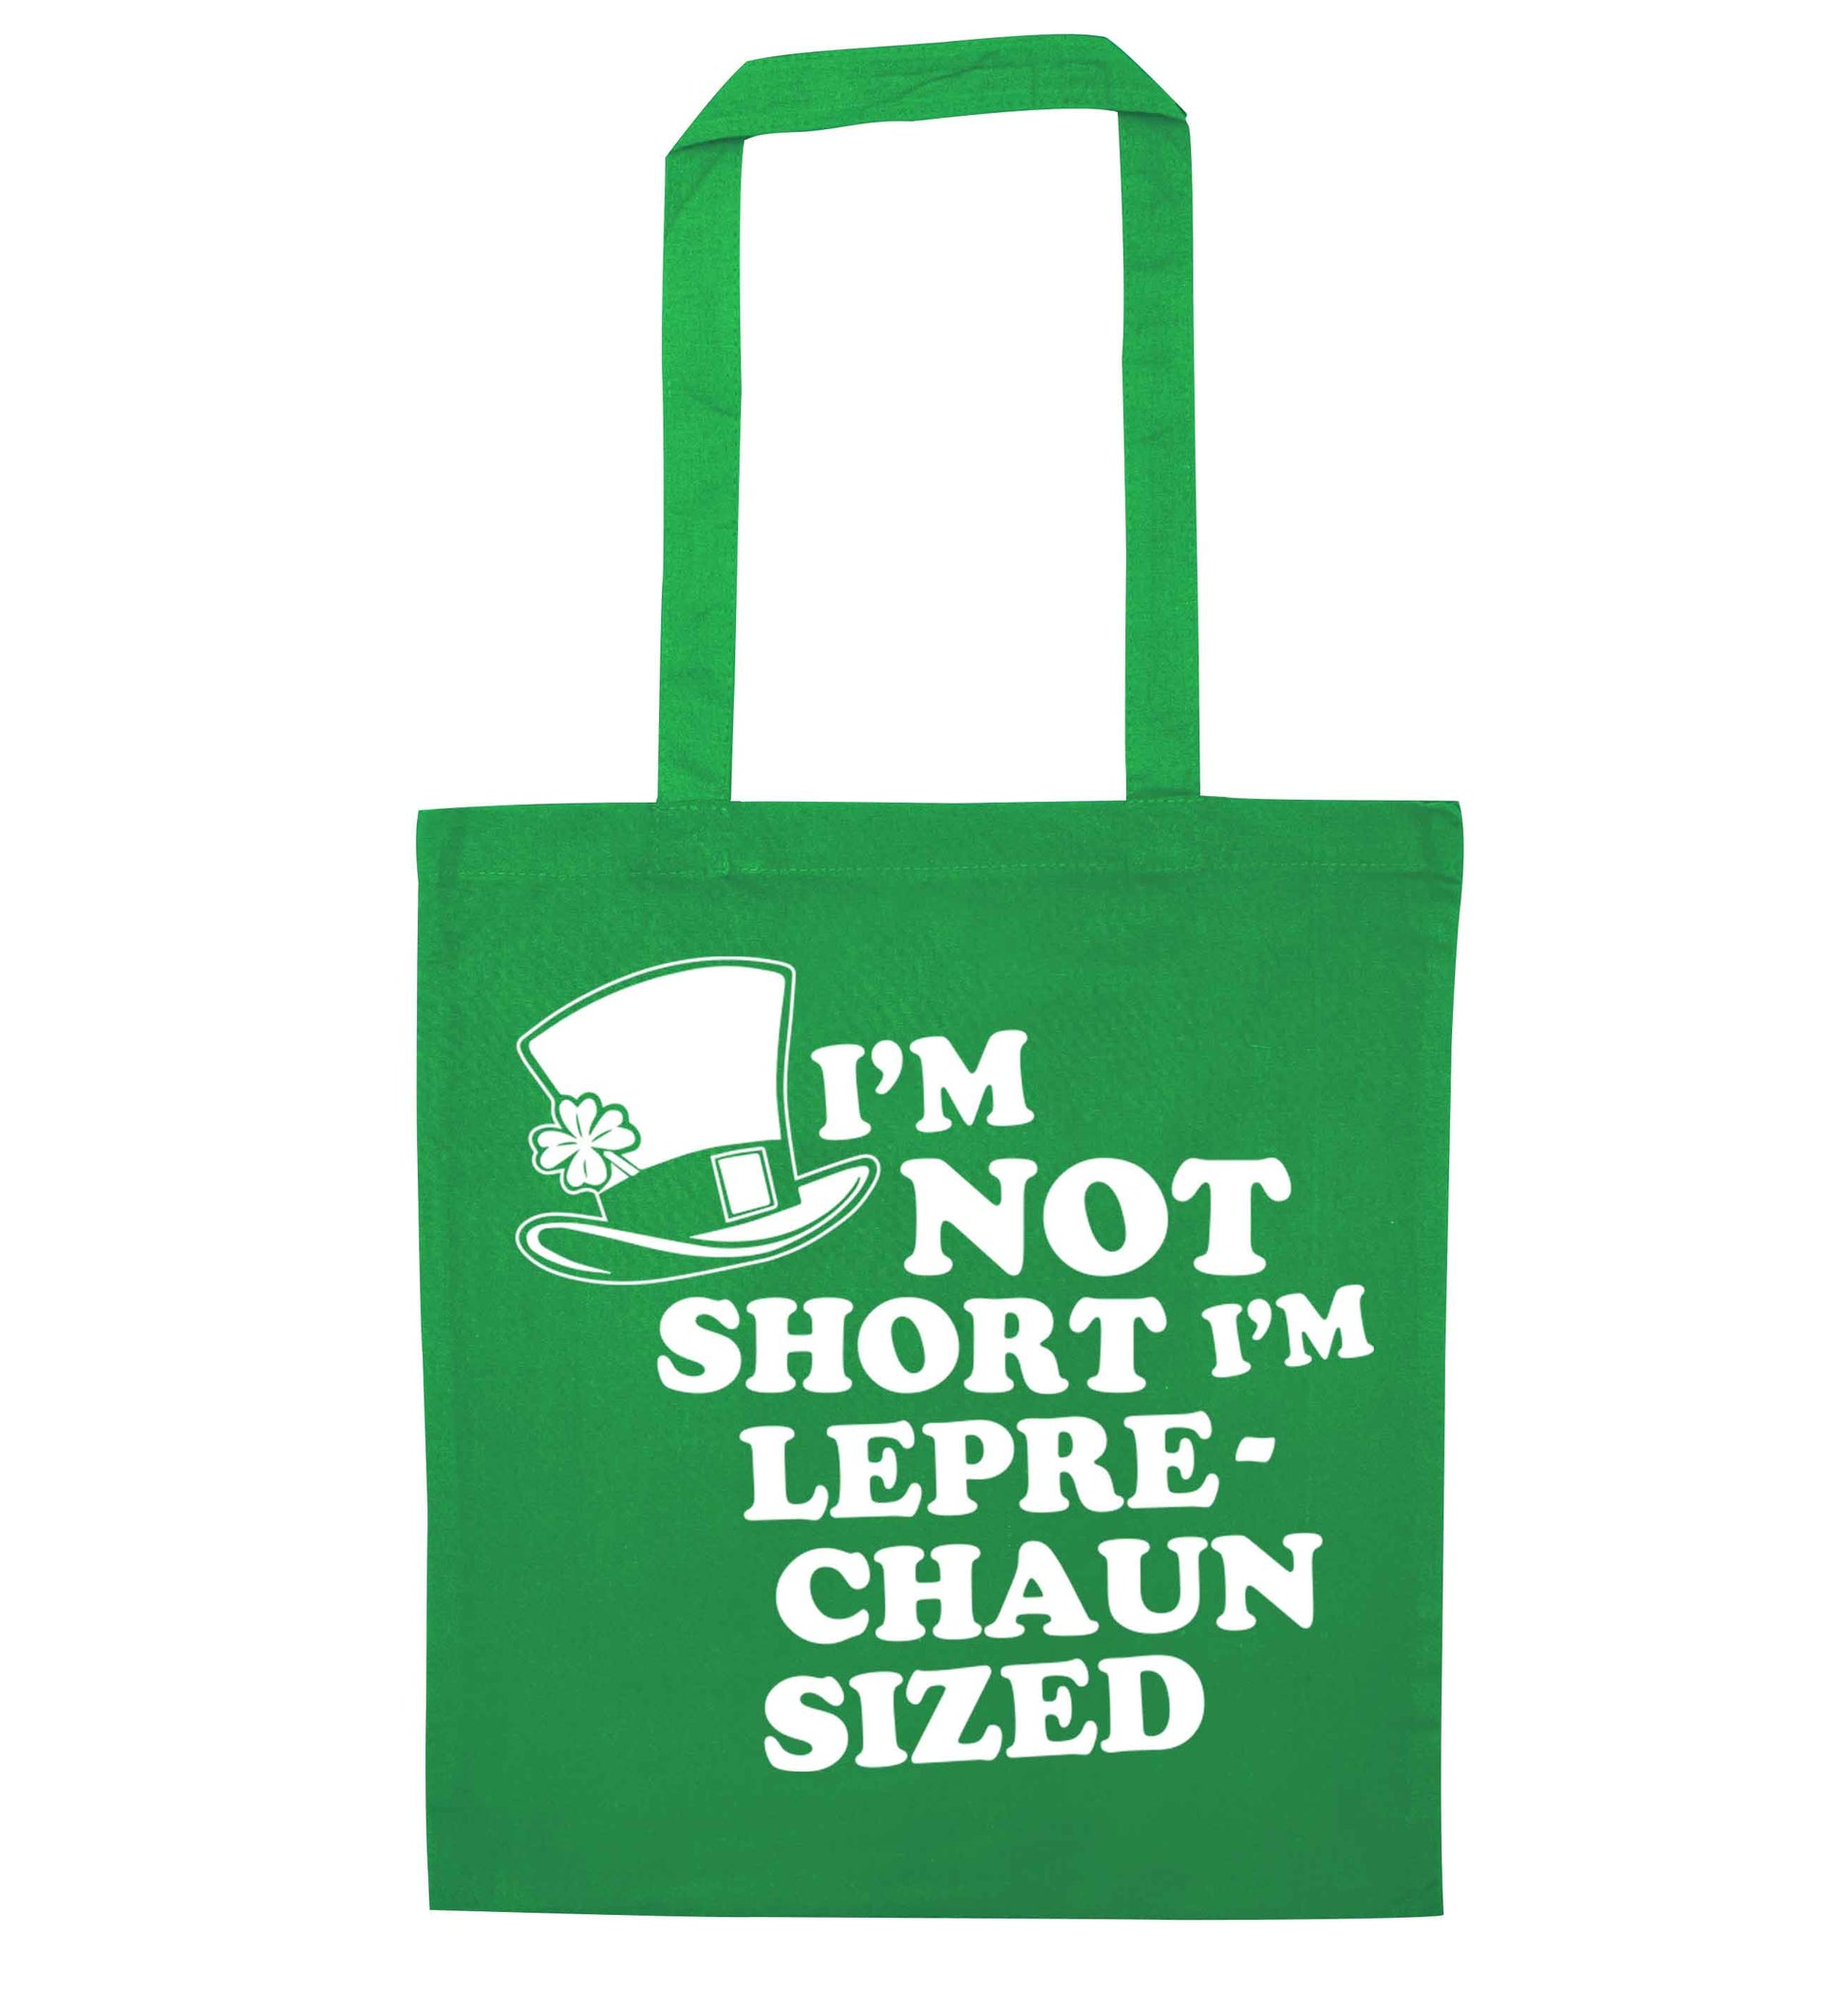 I'm not short I'm leprechaun sized green tote bag